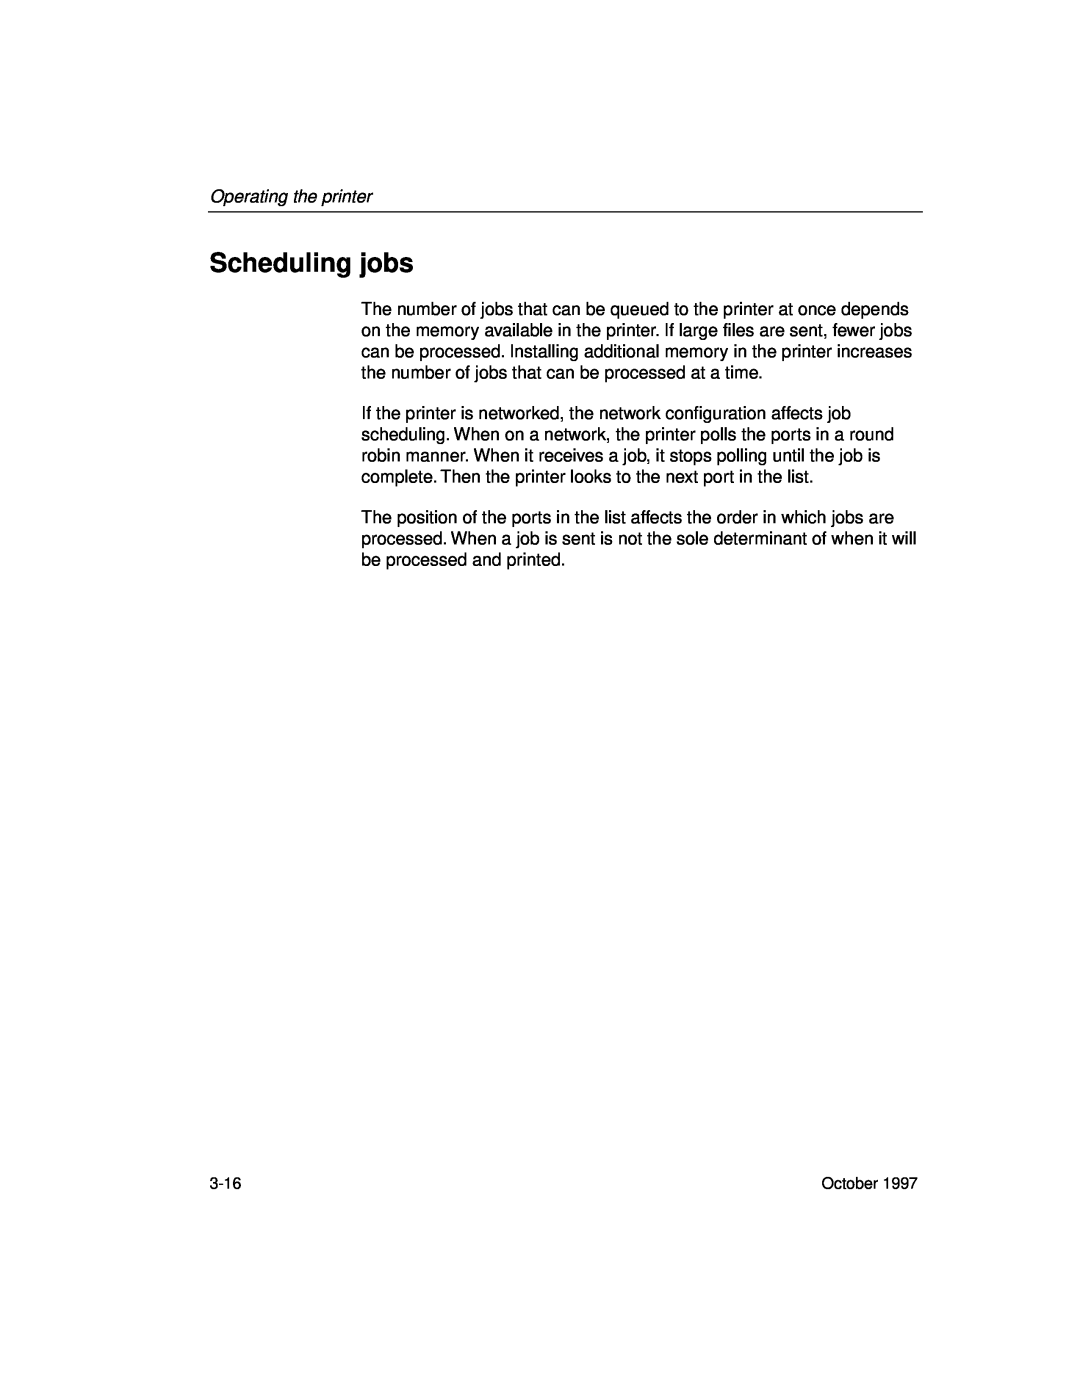 Kodak 8650 manual Scheduling jobs, Operating the printer, 3-16, October 